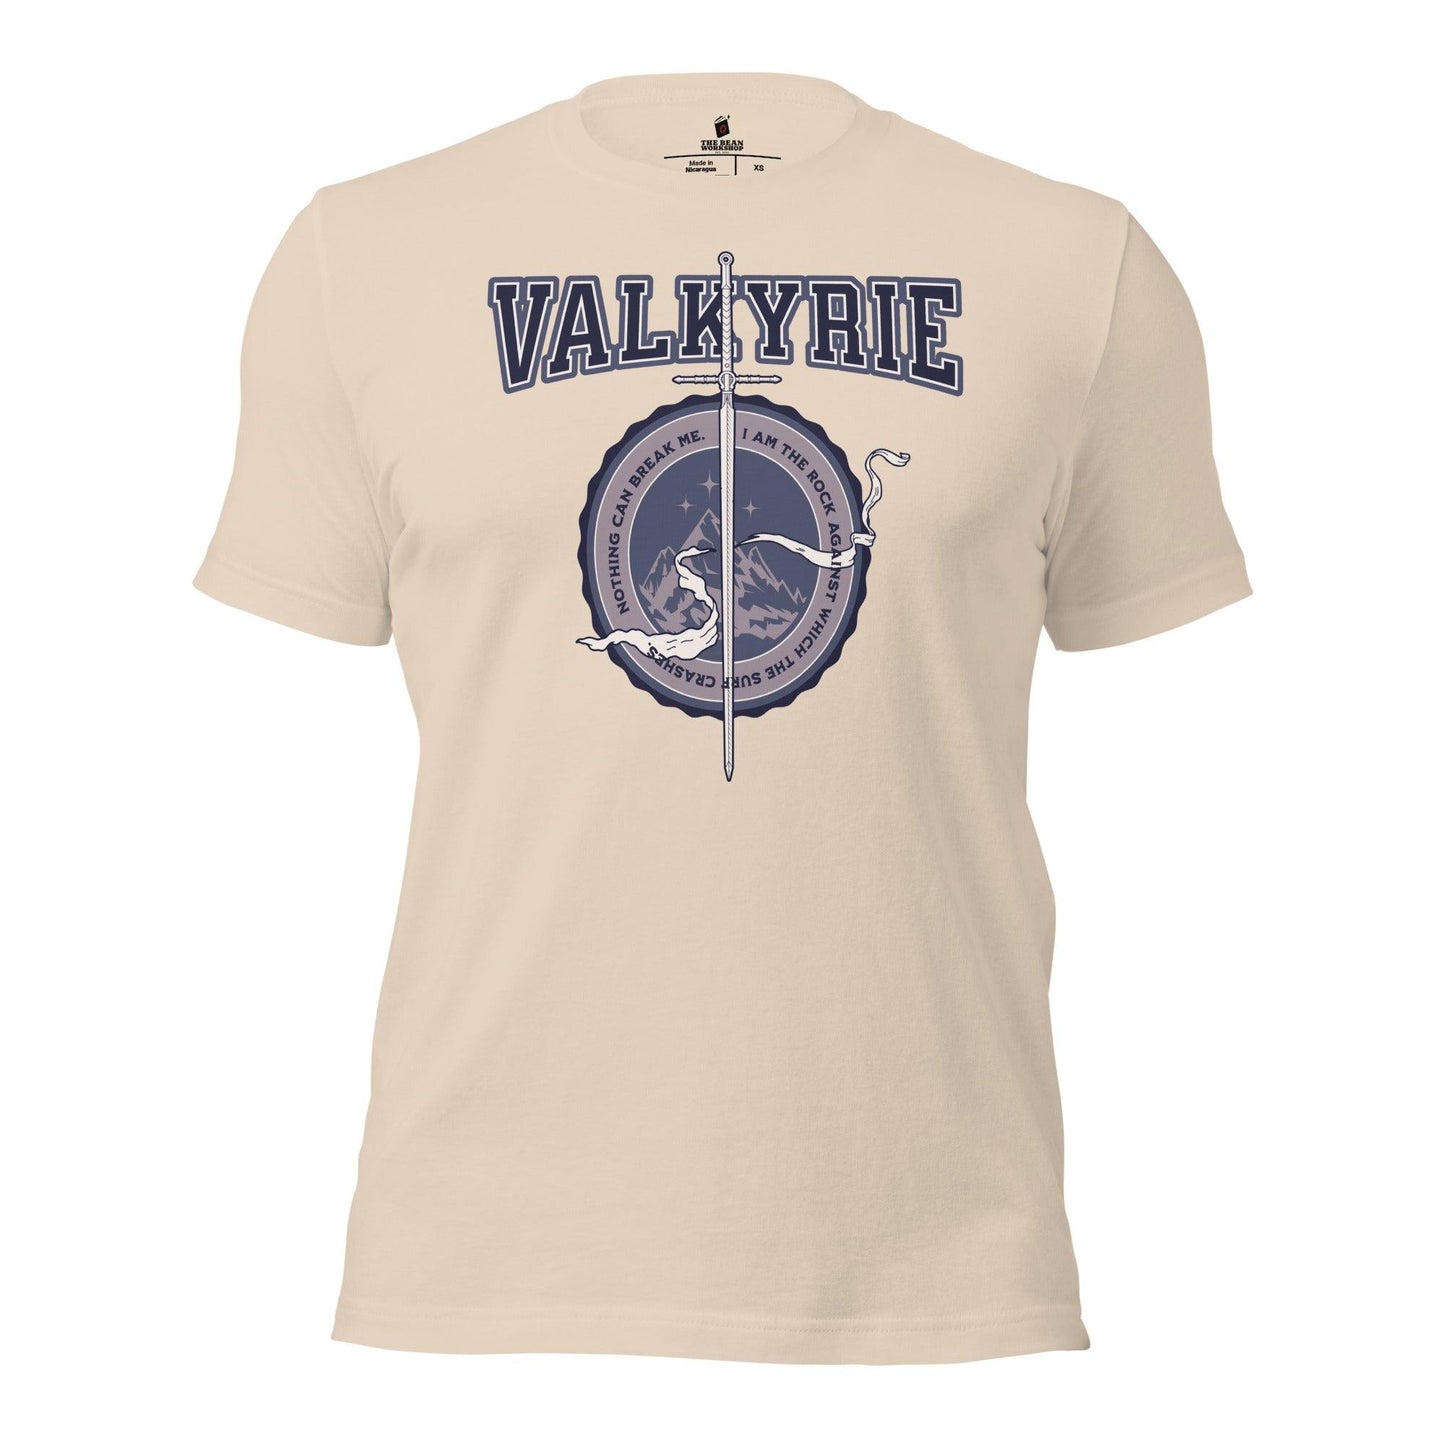 Valkyrie T-Shirt - The Bean Workshop - a court of thorns and roses, acotar, feyre archeron, rhysand, sarah j maas, t-shirt